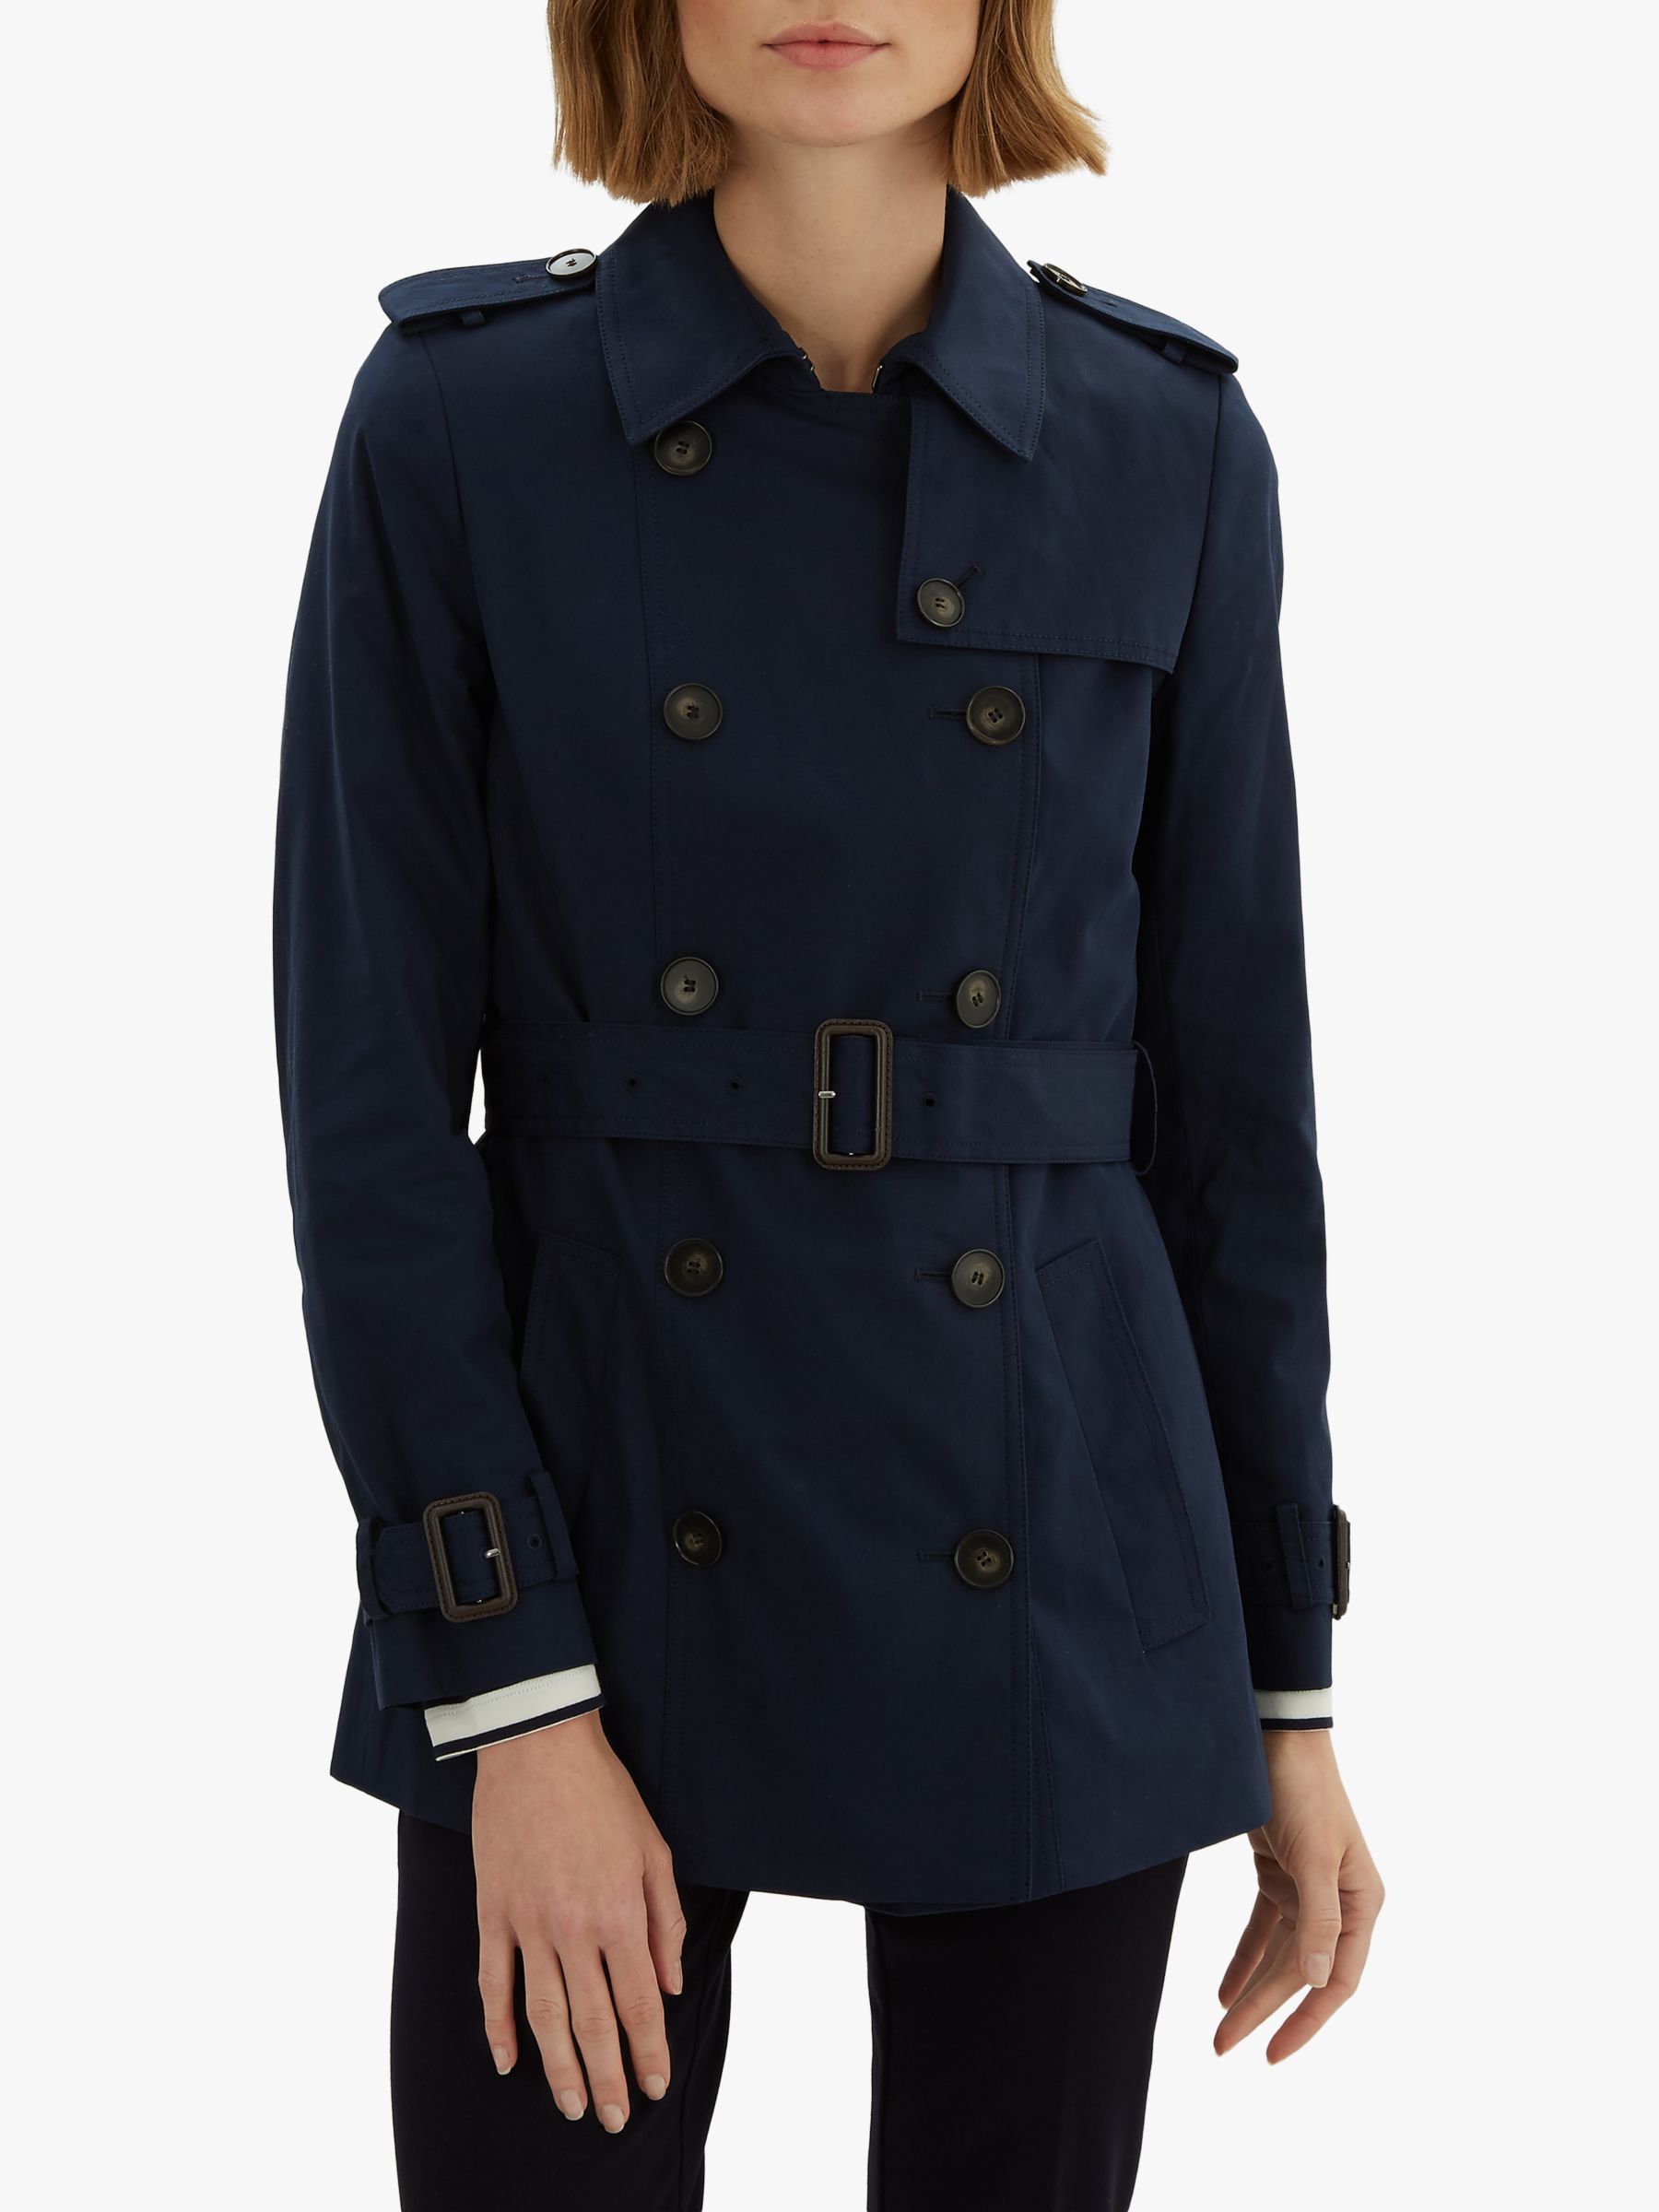 short navy jacket